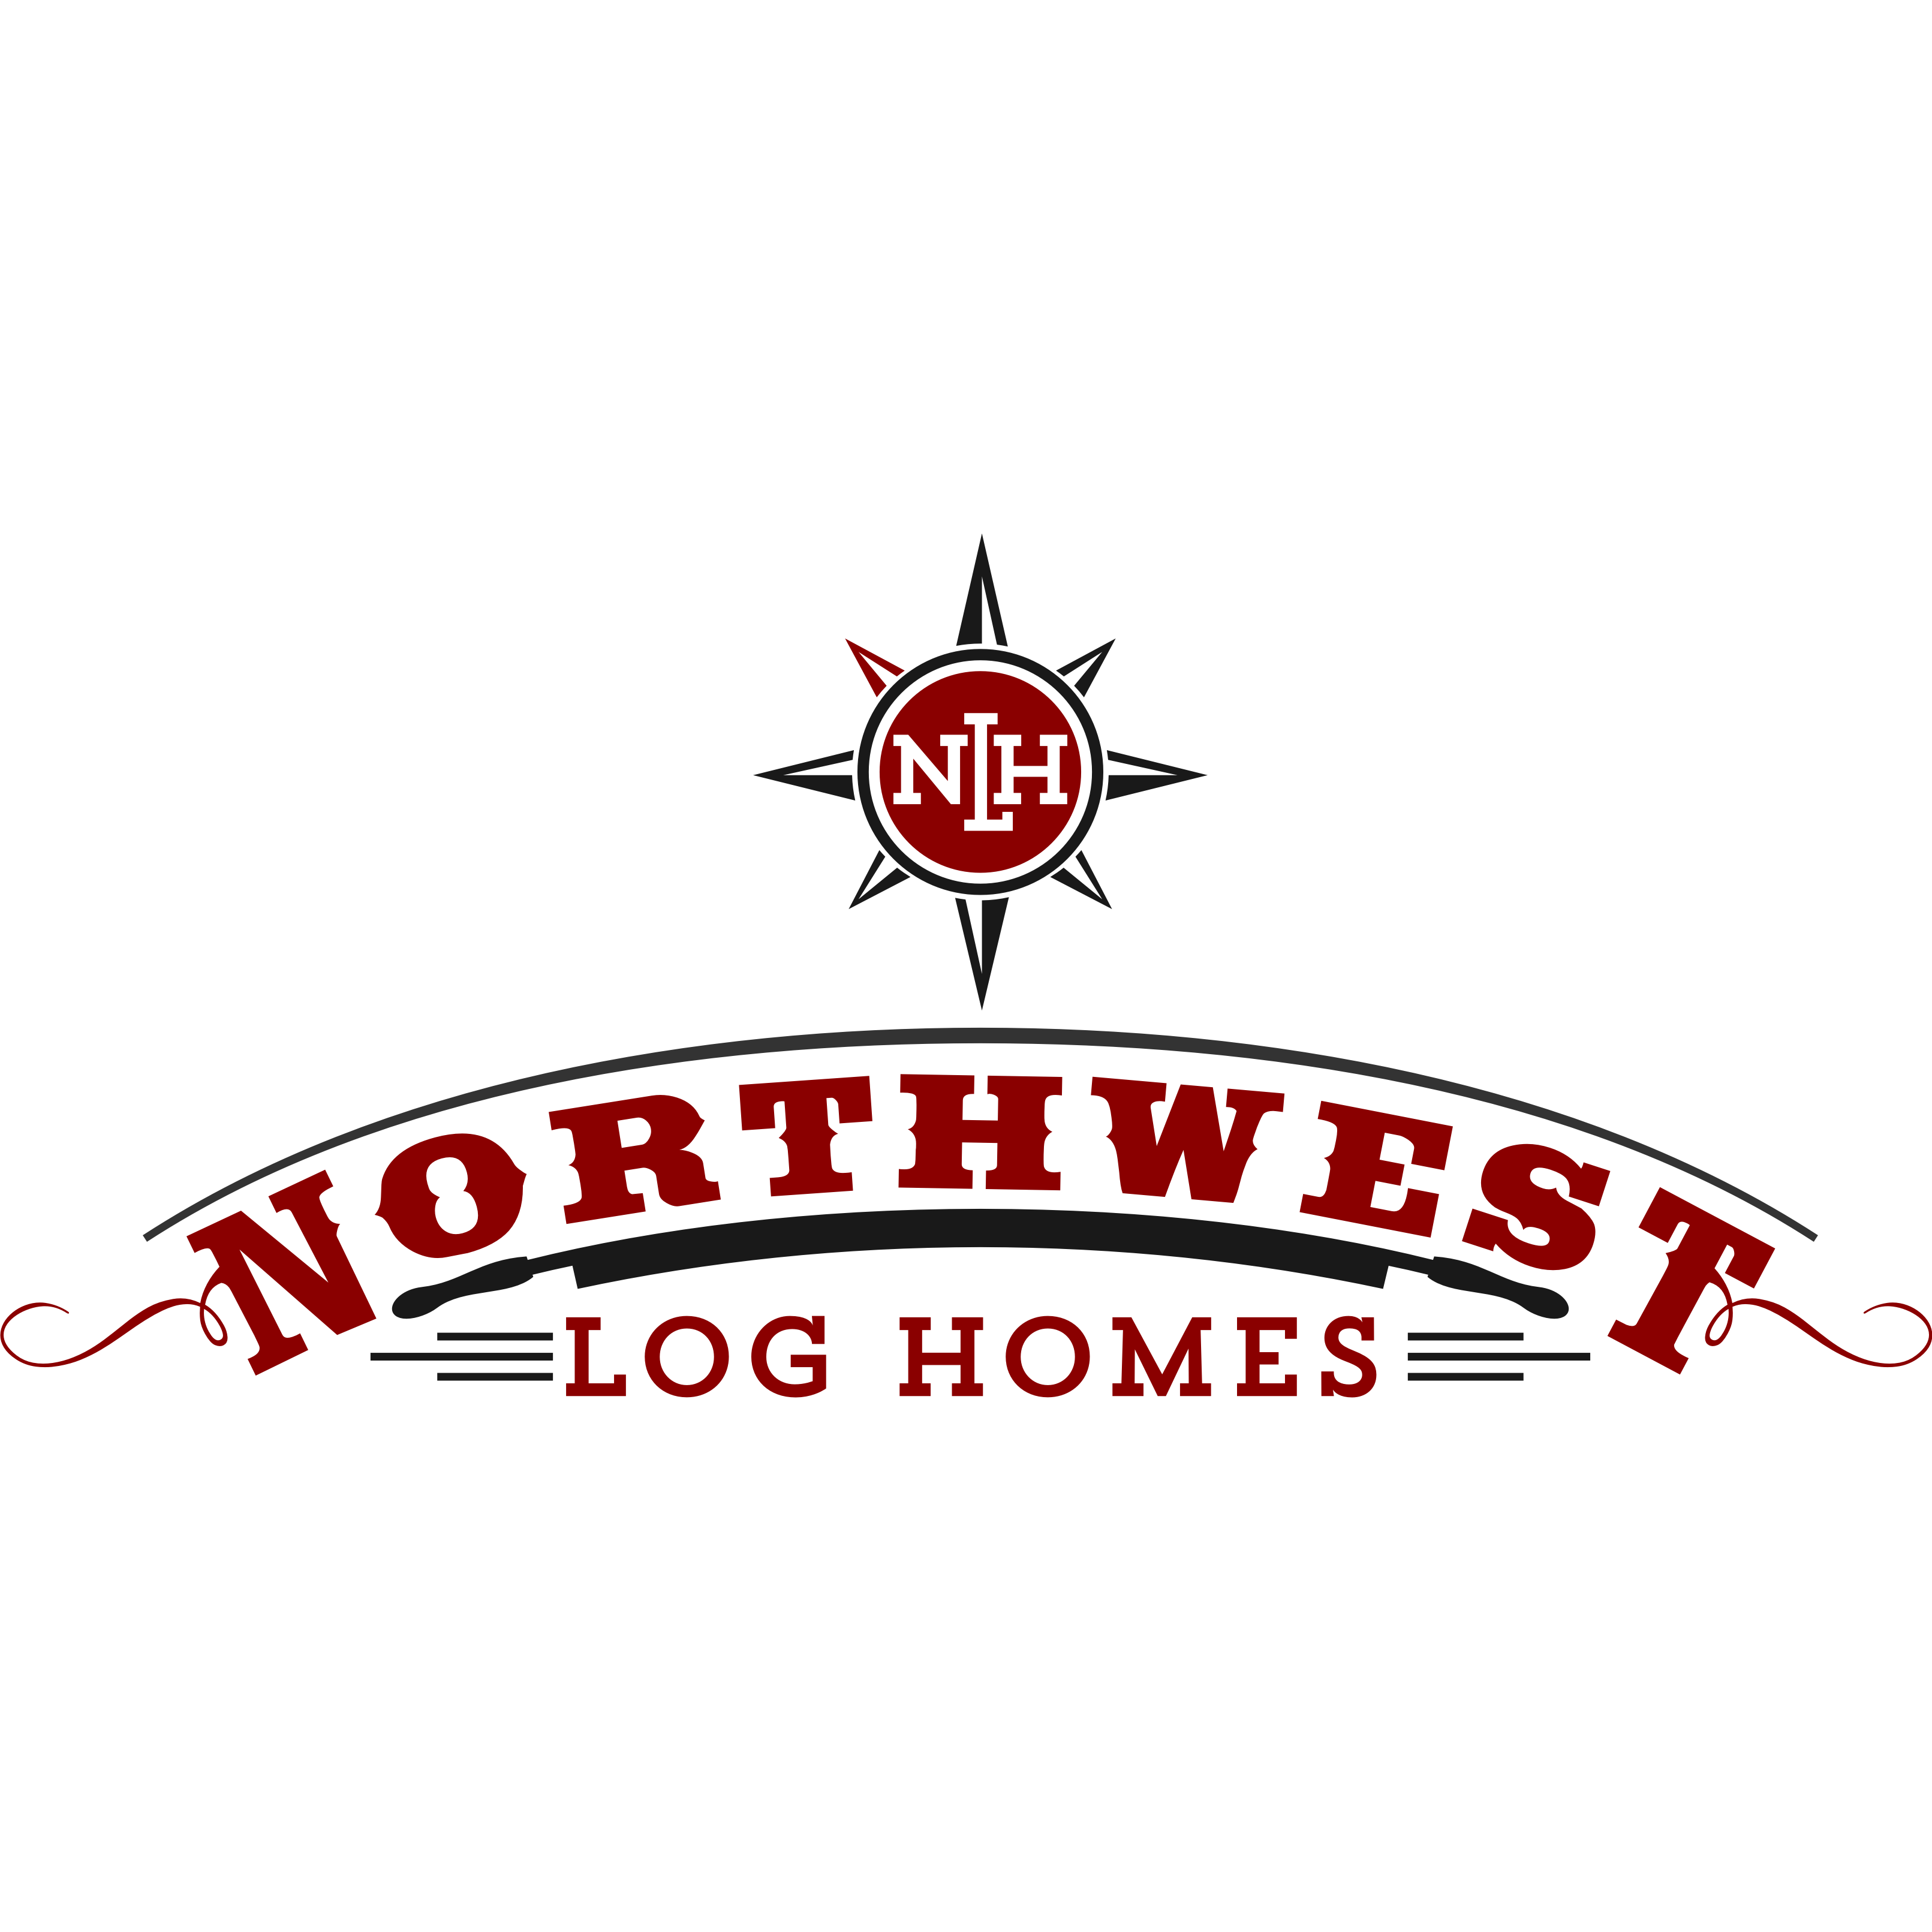 Northwest Log Homes - Rexford, MT 59930 - (406)291-2818 | ShowMeLocal.com